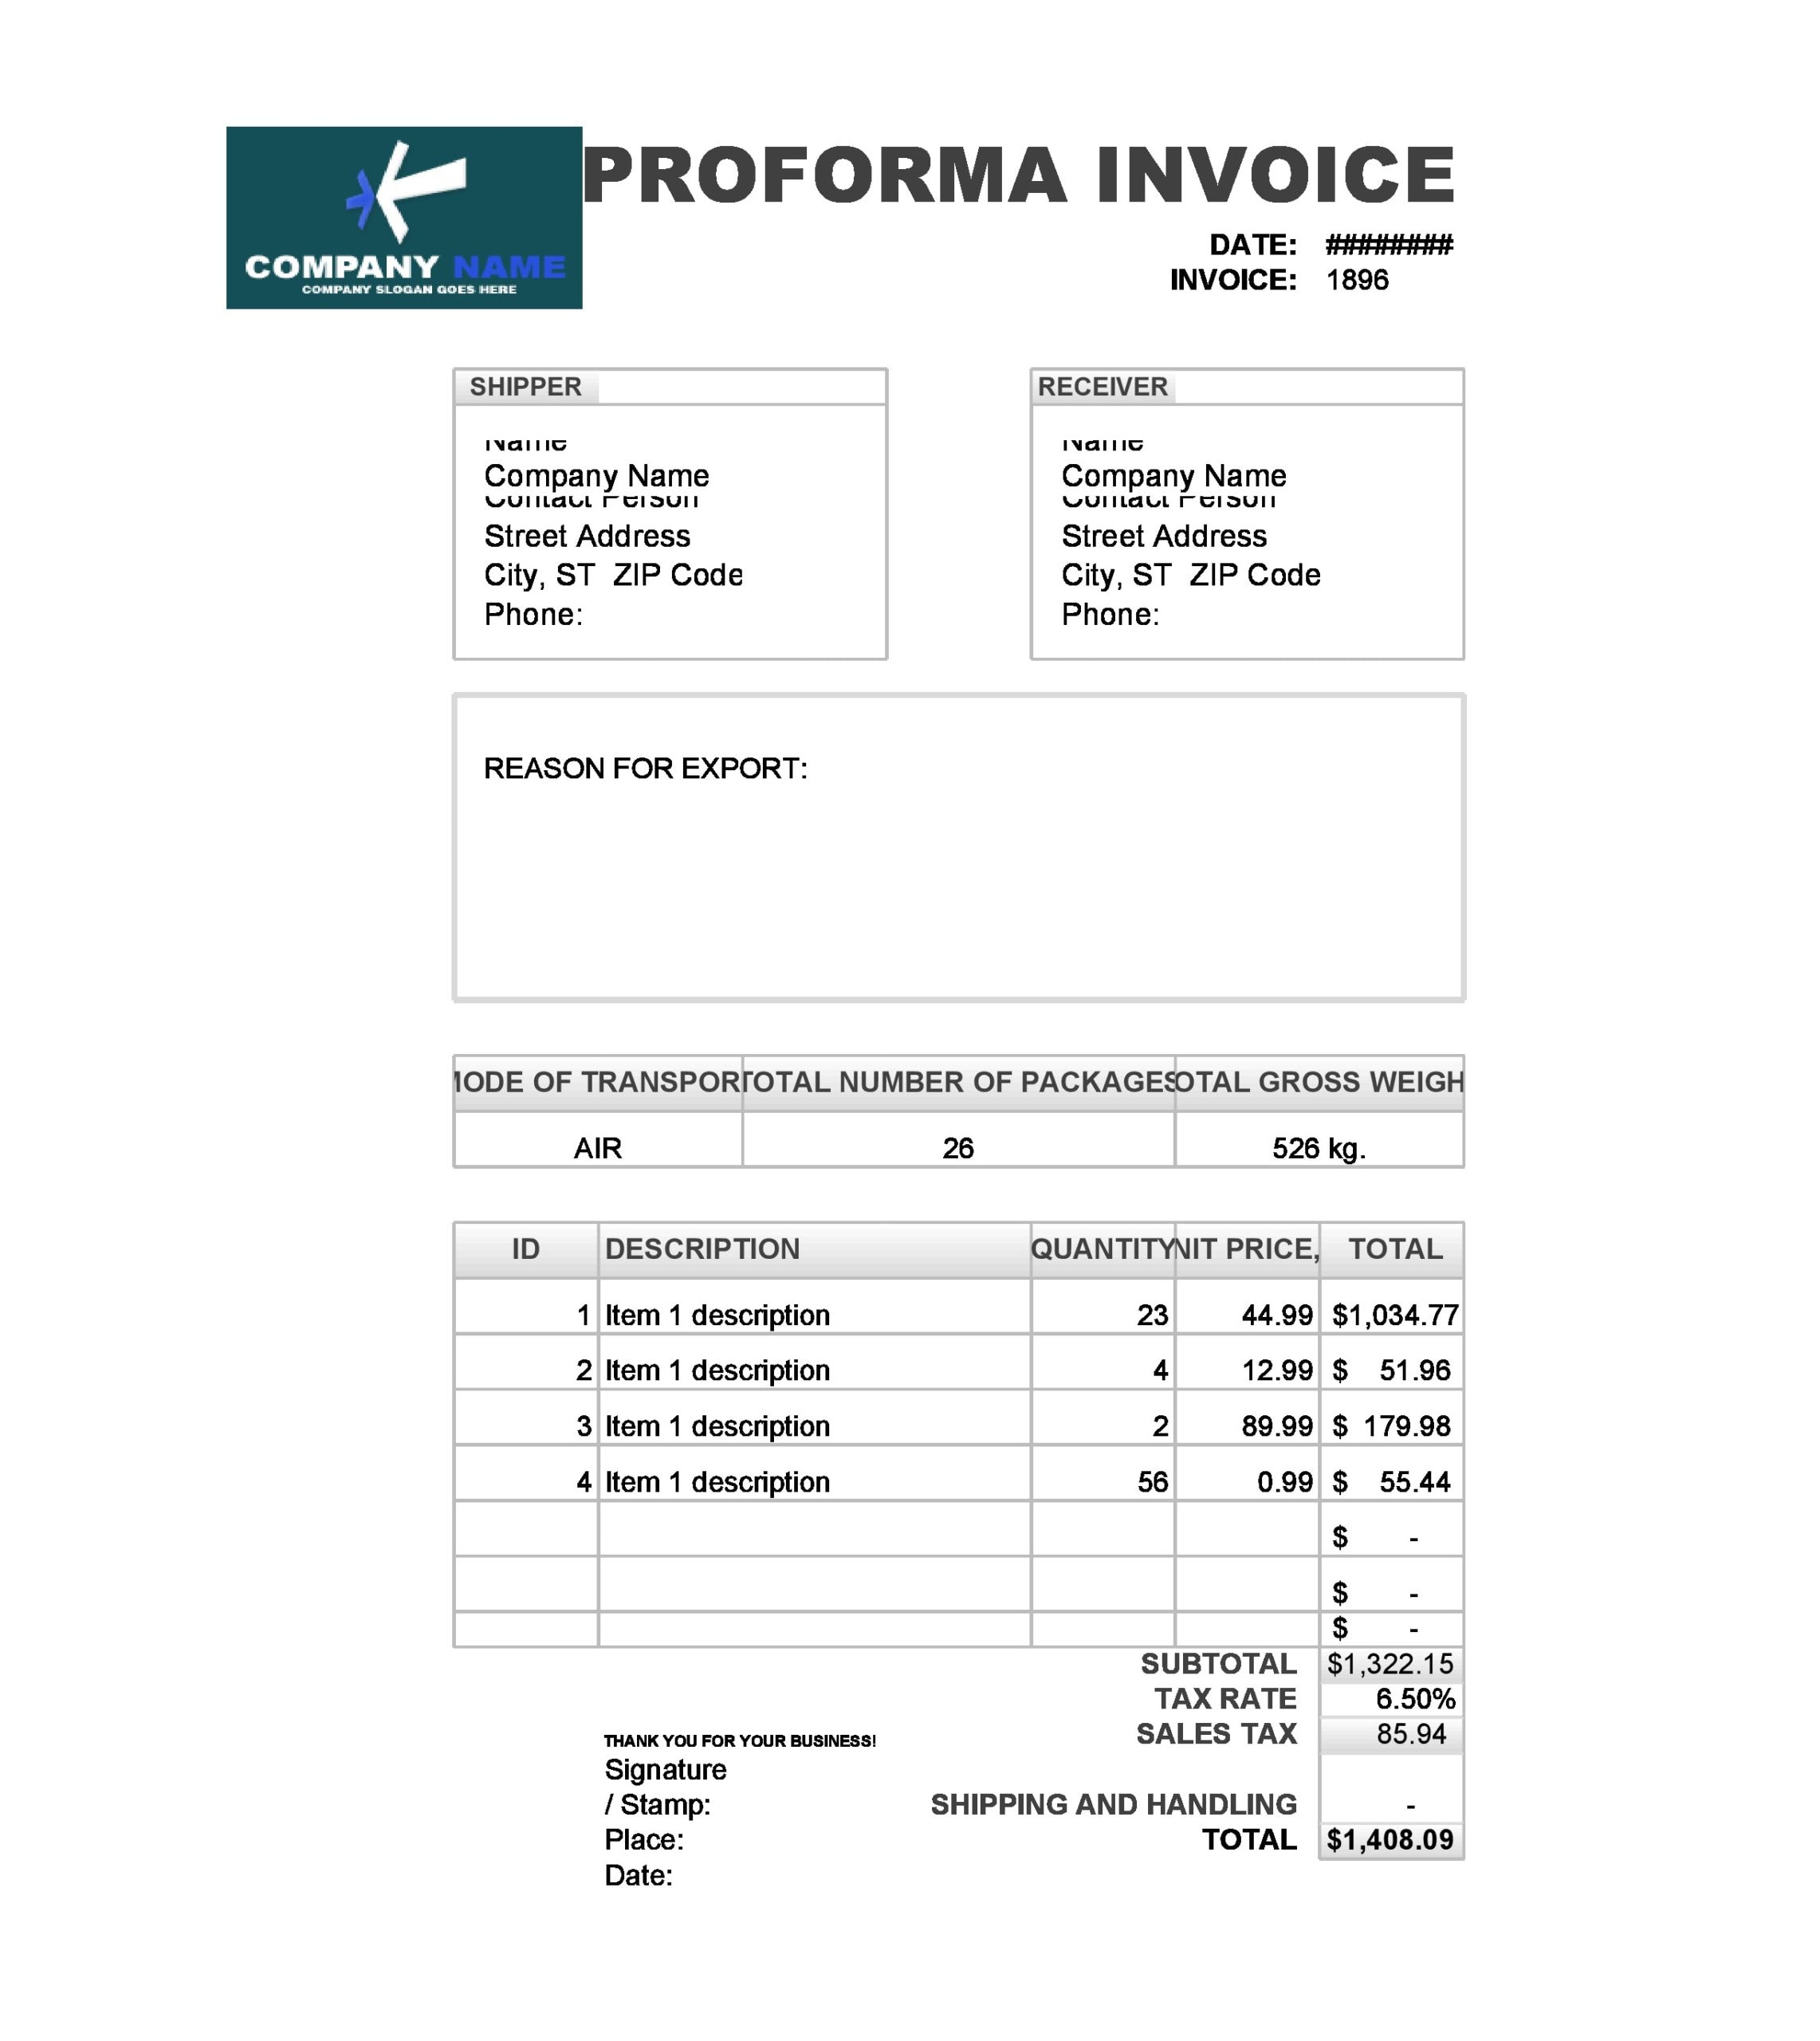 proforma invoice template excel